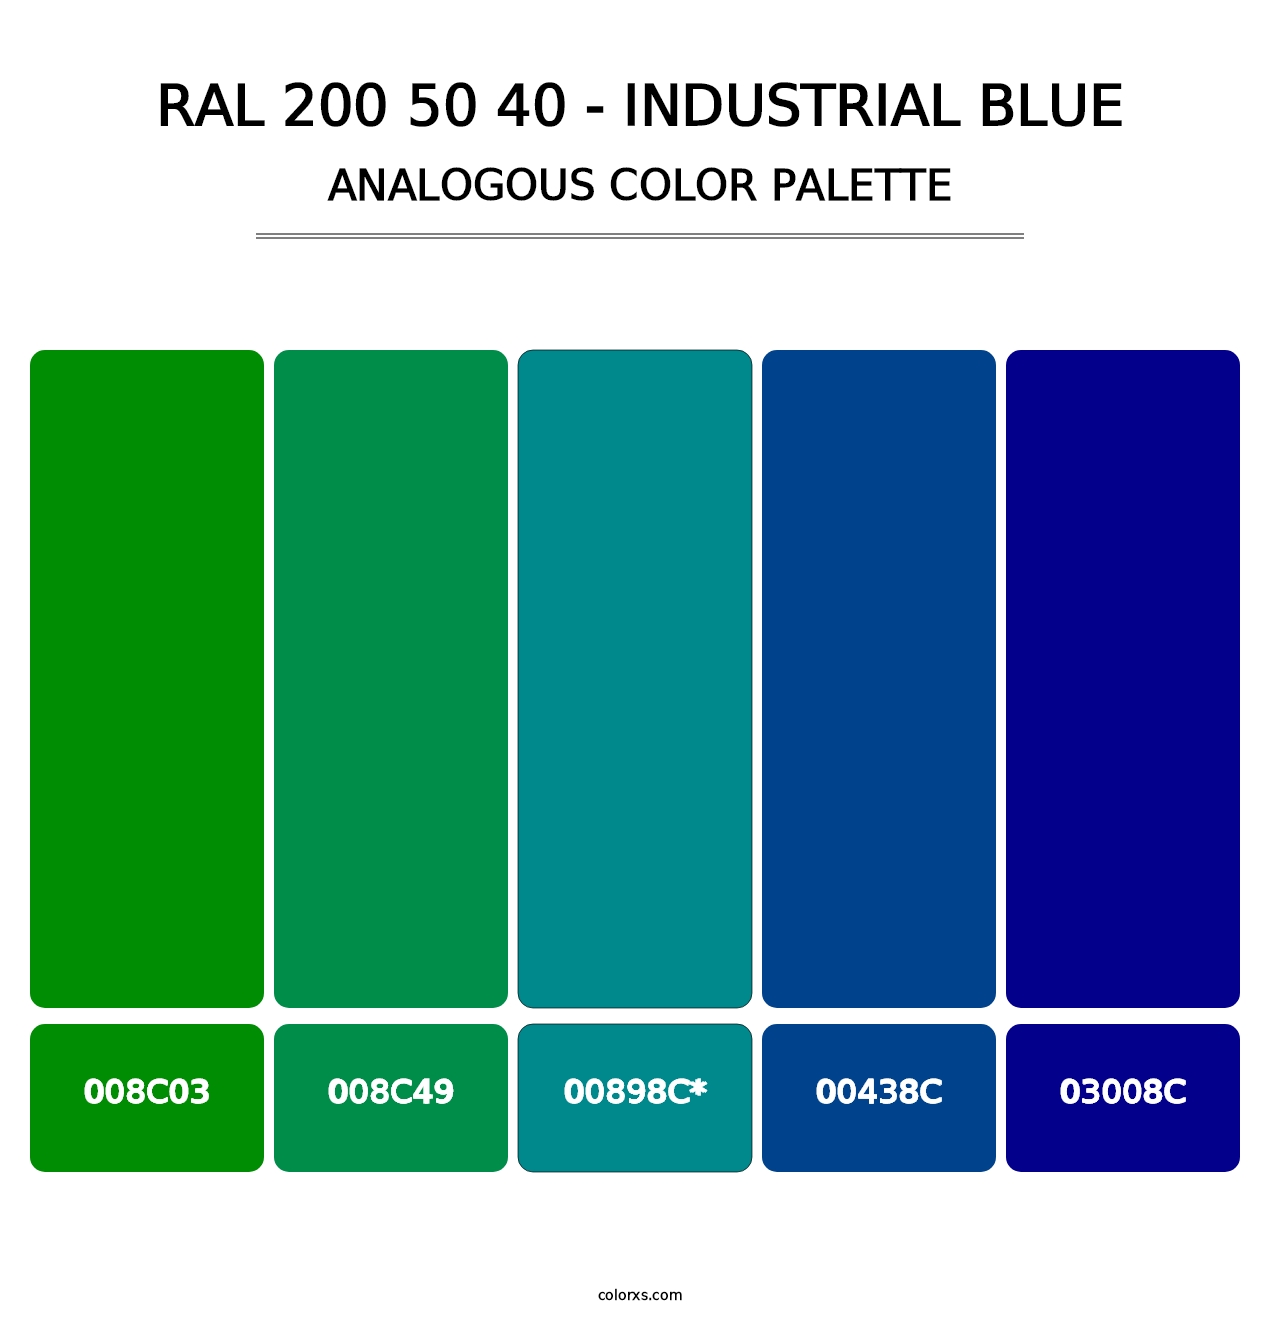 RAL 200 50 40 - Industrial Blue - Analogous Color Palette